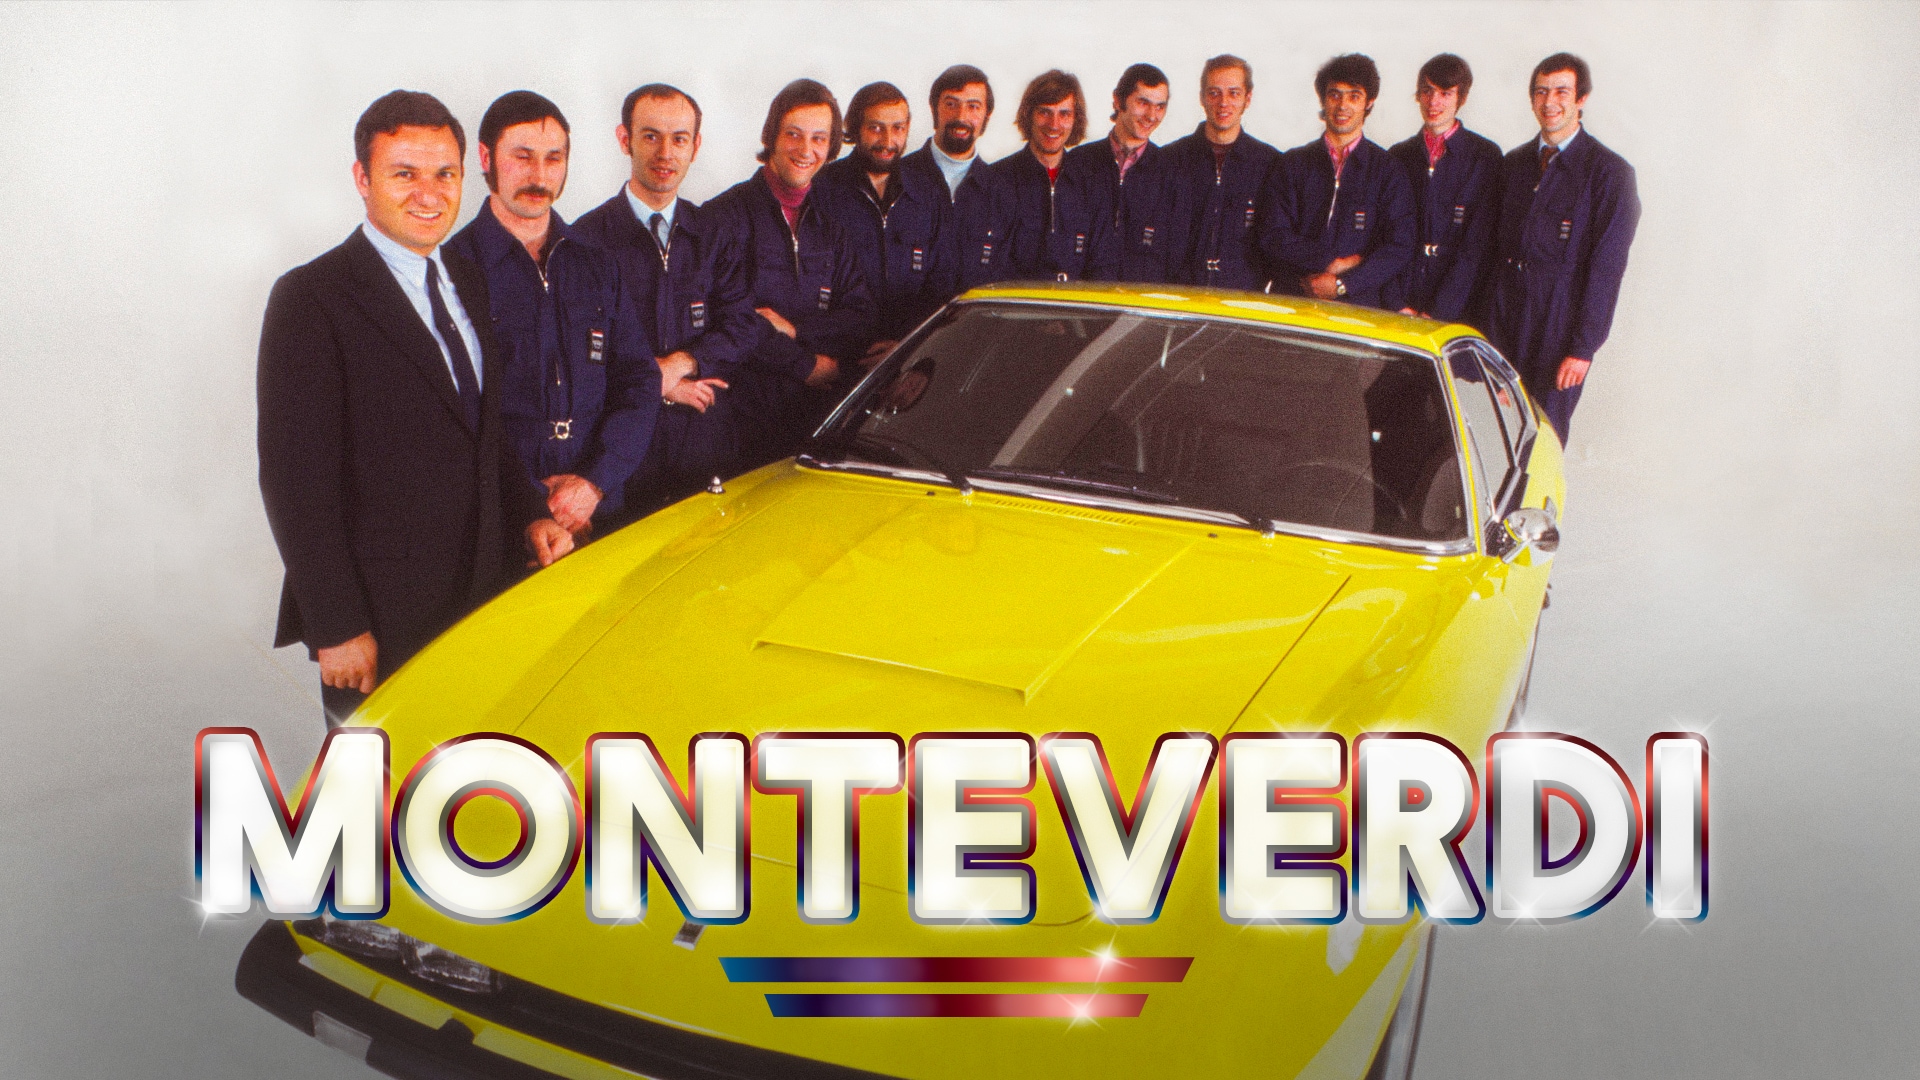 Monteverdi - L'ultima casa automobilistica svizzera